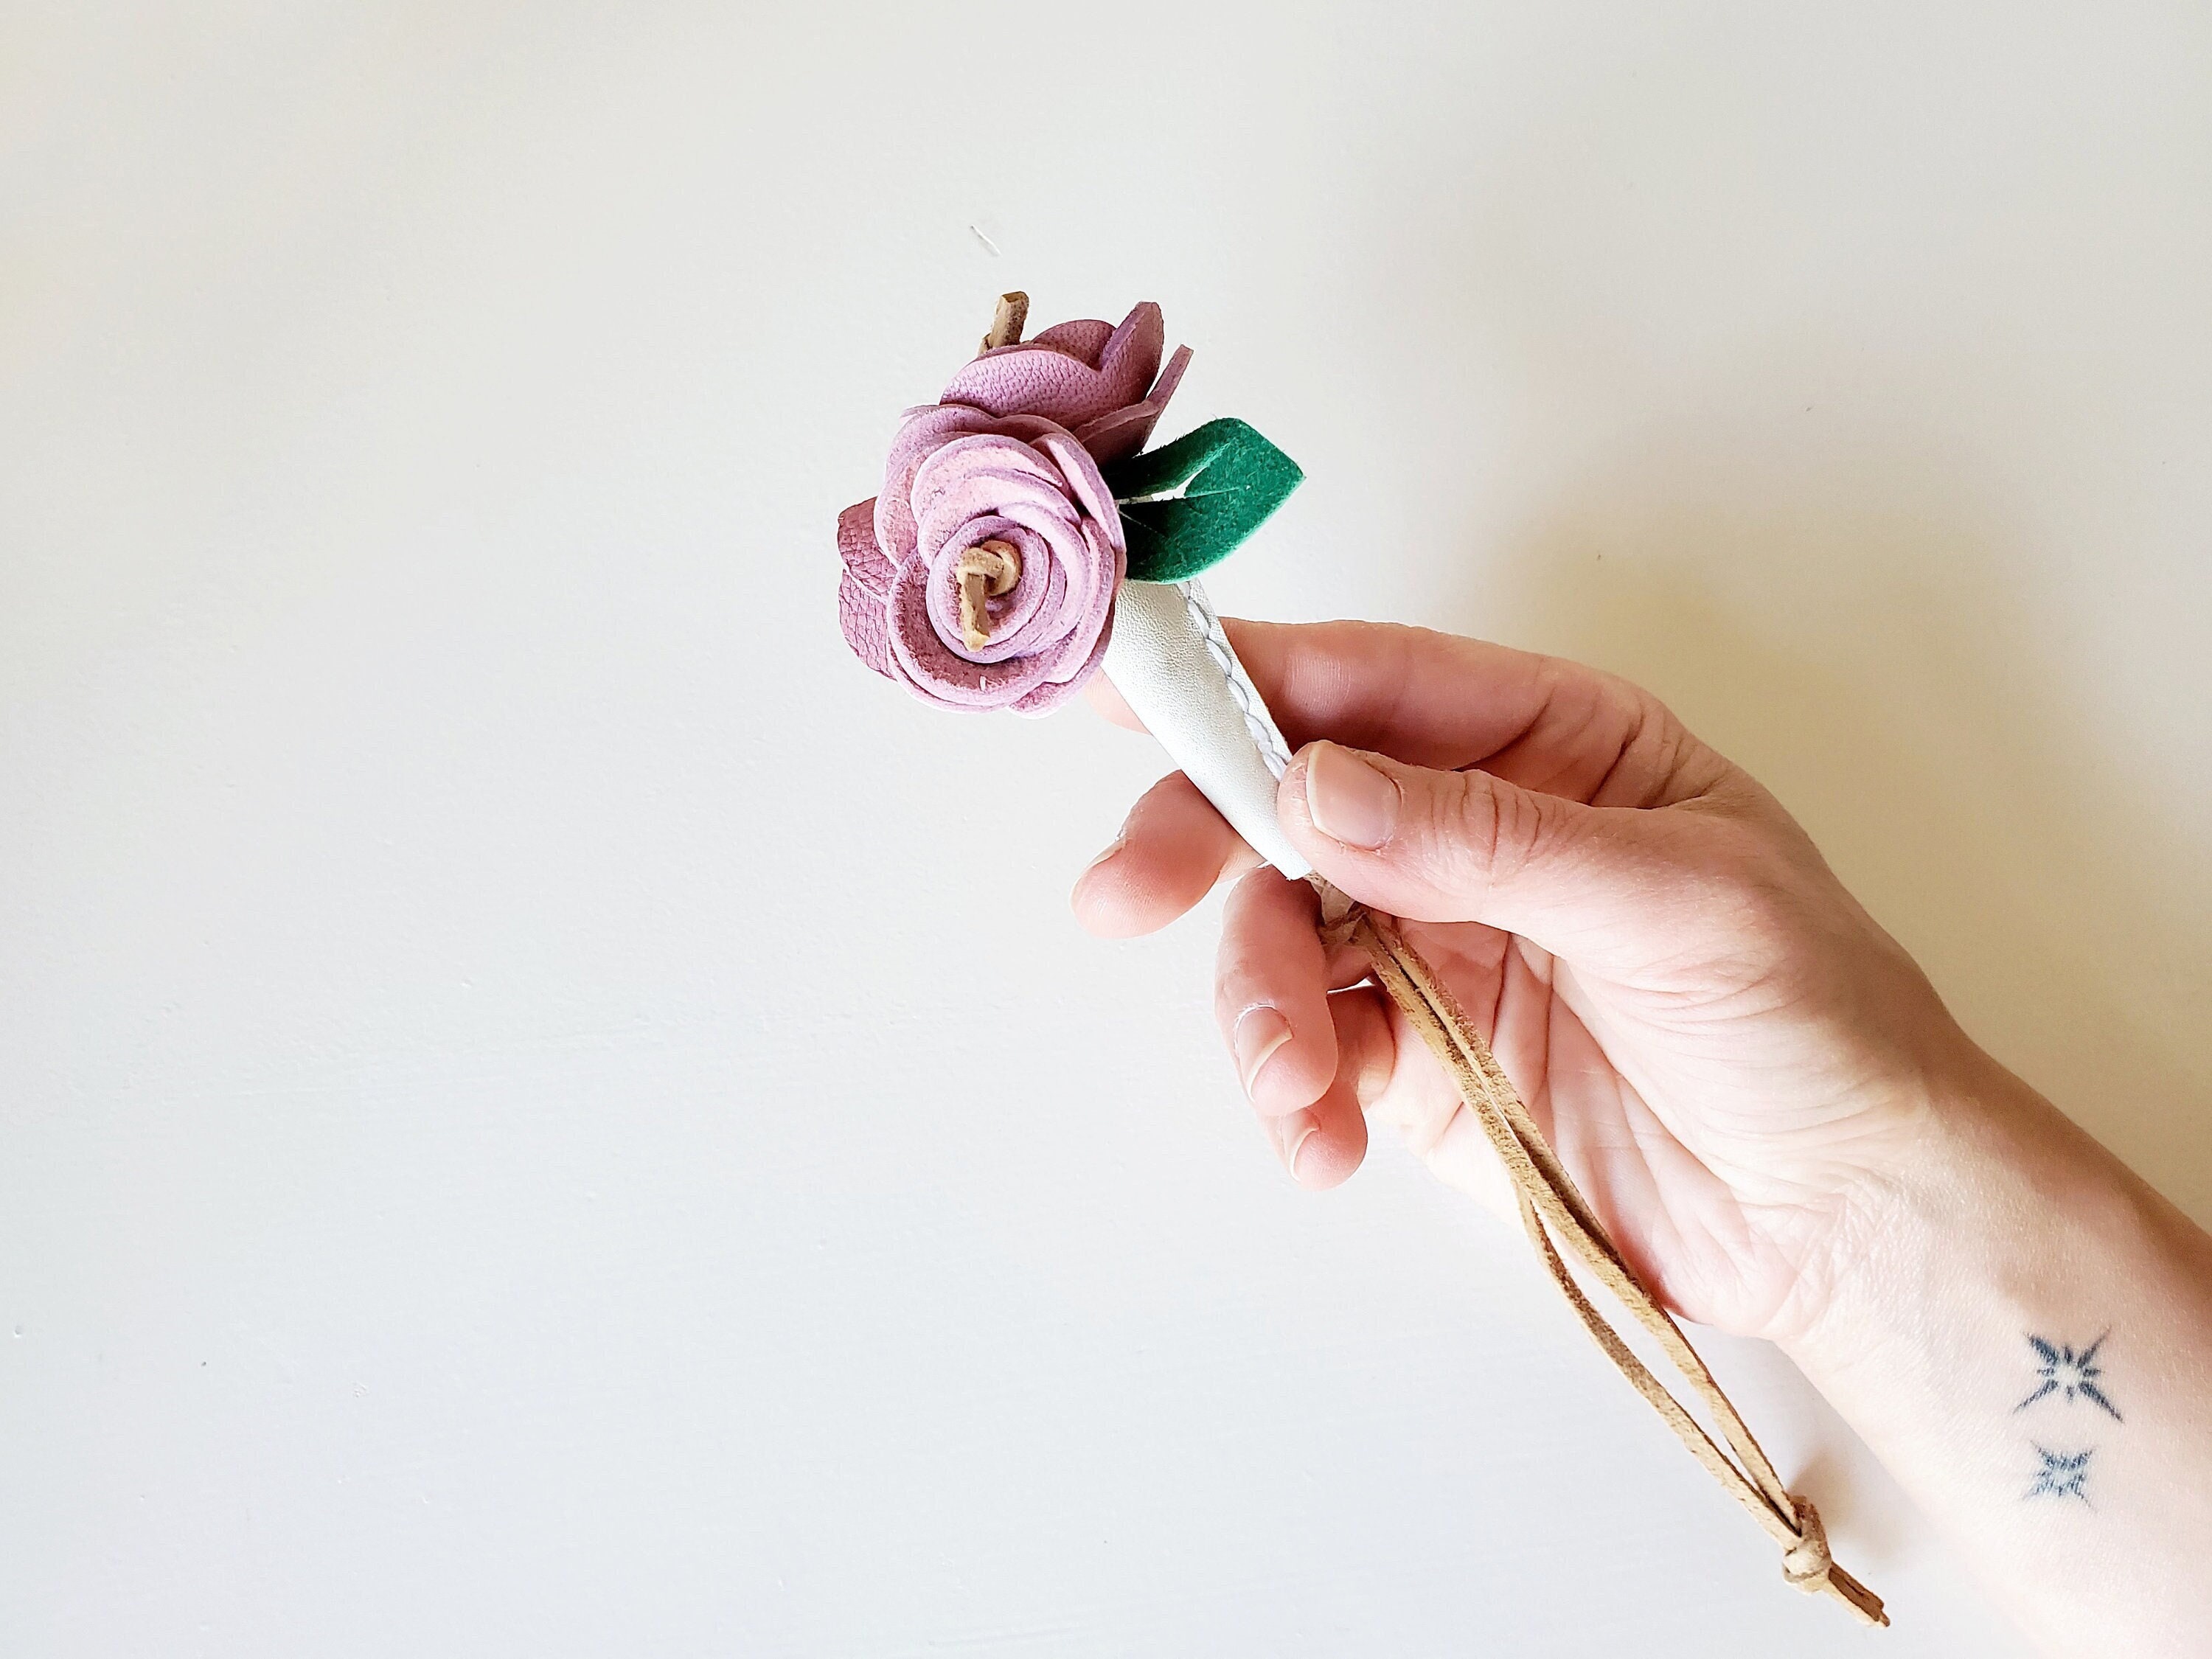 Old Rose Pink Flower Keychain Genuine Leather Handbag Purse Charm Spring  Ring